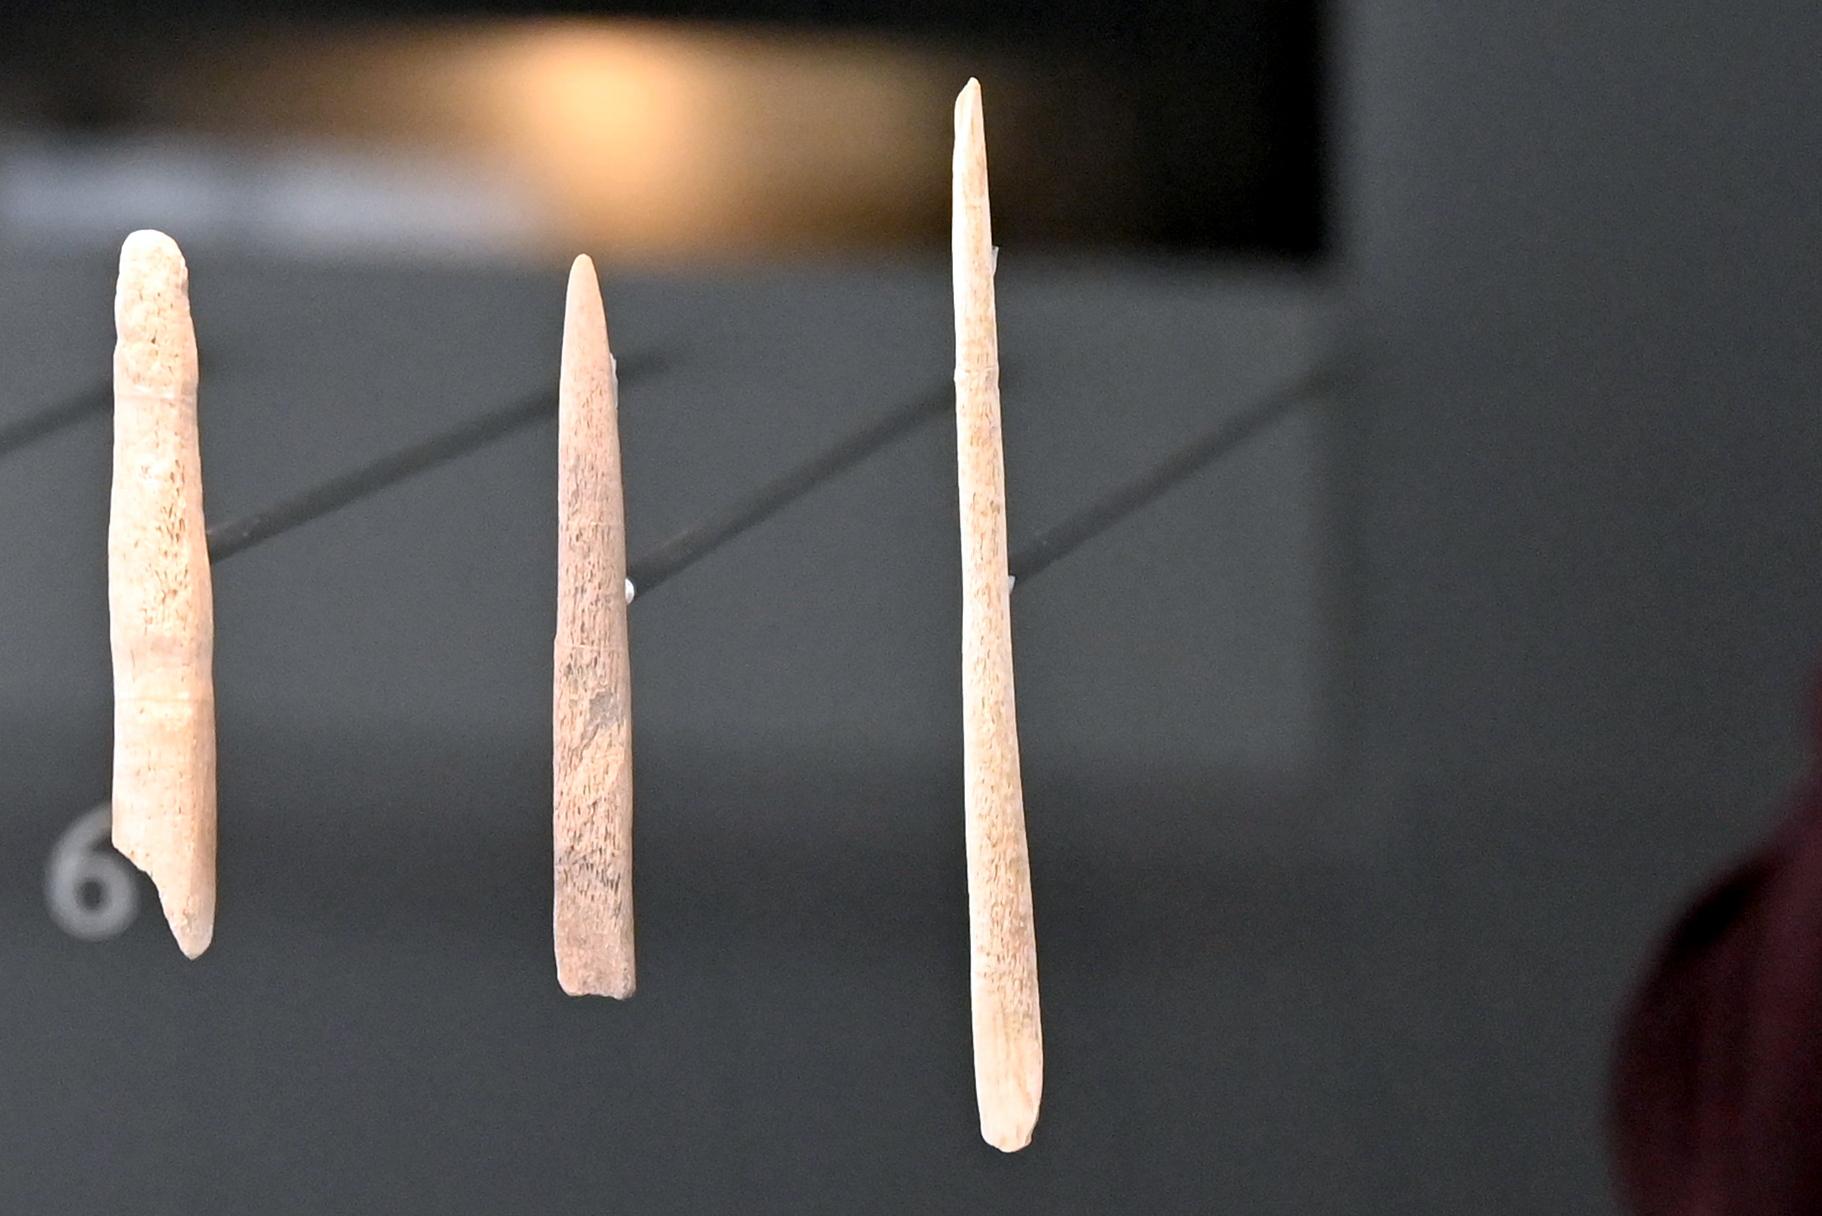 Zwei Geschossspitzen mit beidseitig abgeschrägter Basis, 14000 - 10000 v. Chr.